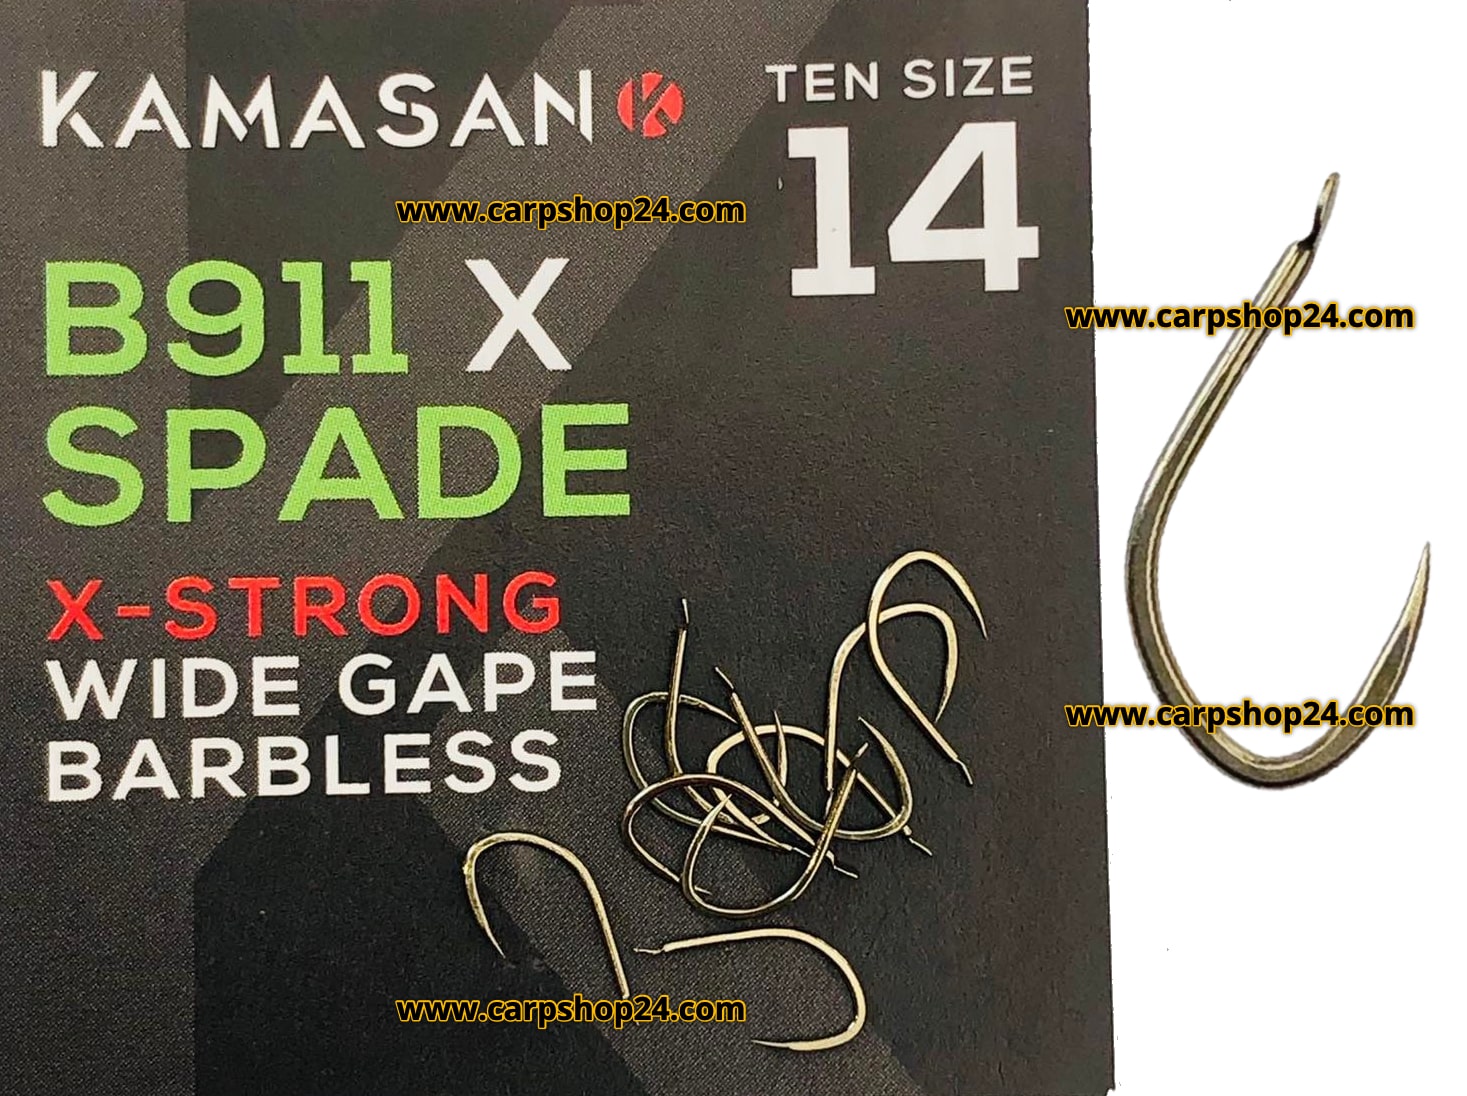 kamasan B911X spade x-strong wide gape barbless haak size 14